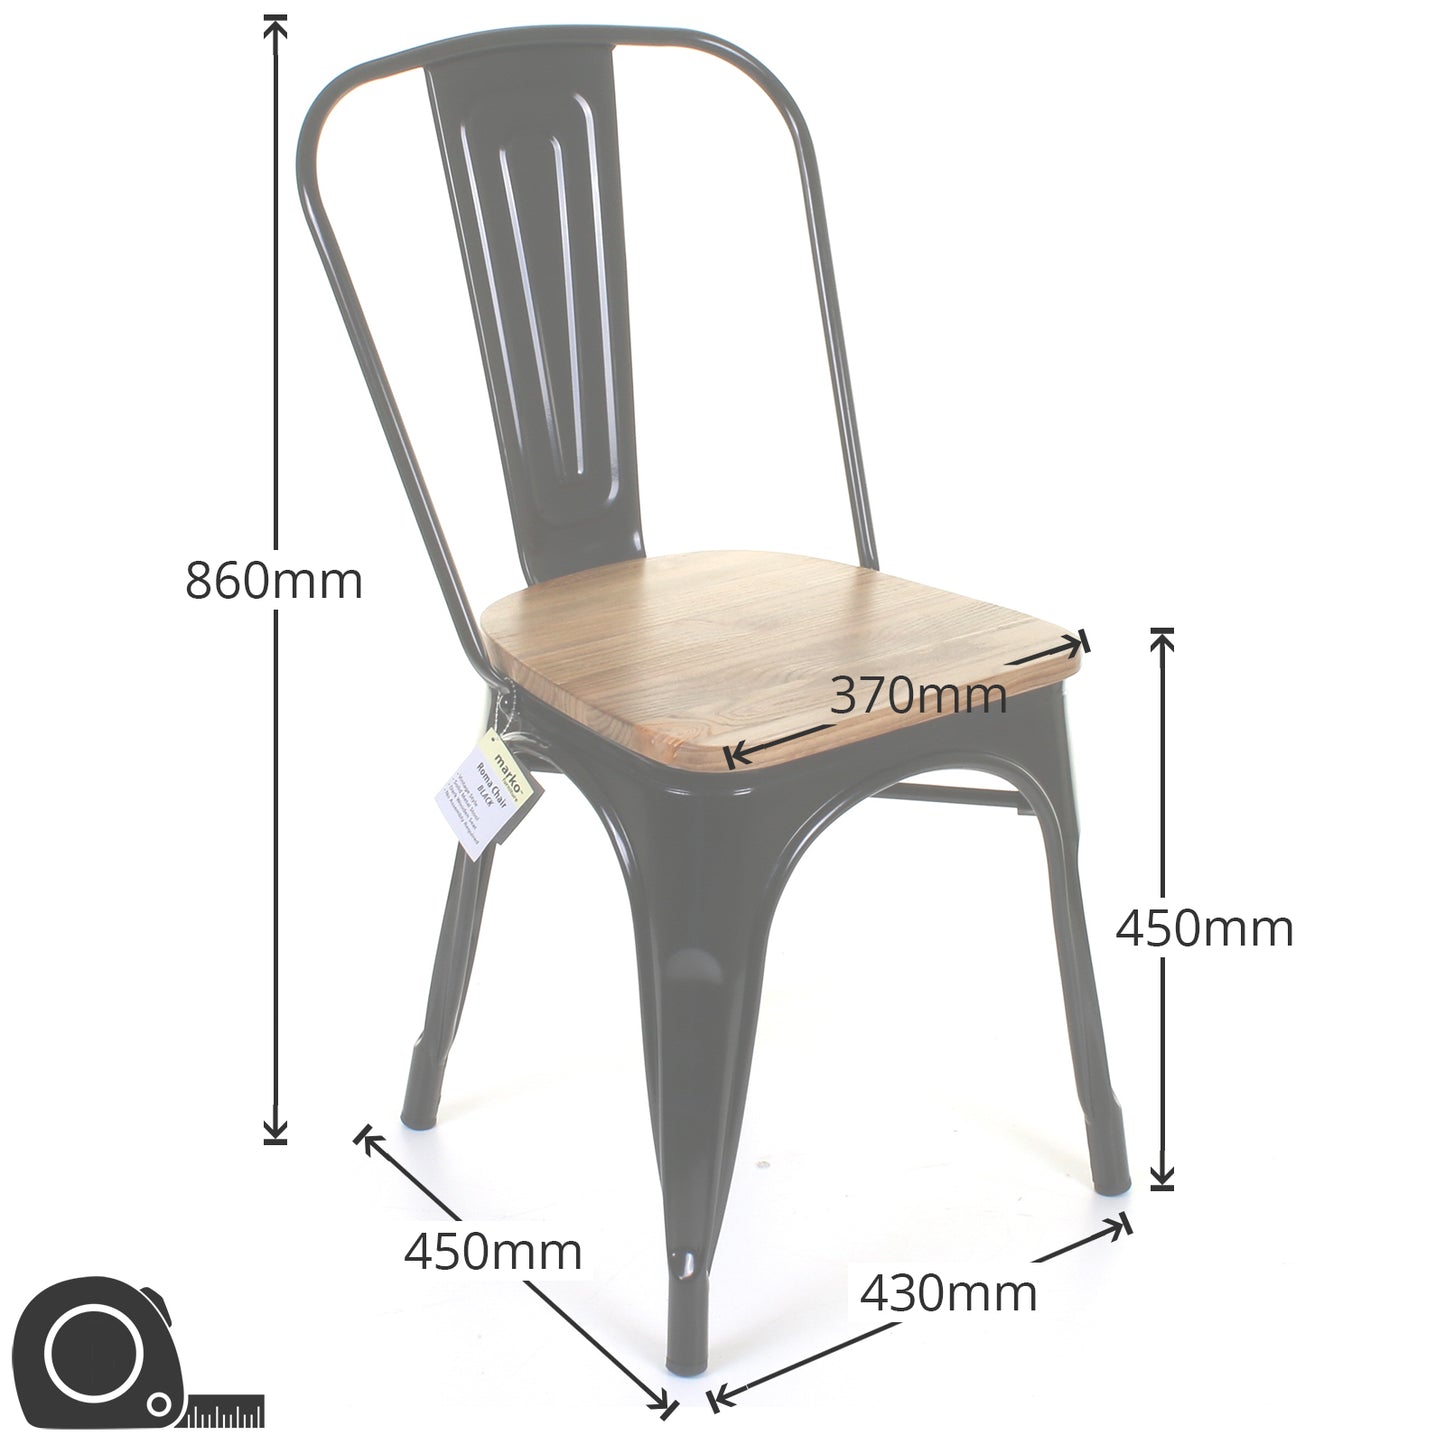 5PC Enna Table & Palermo Chair Set - Onyx Matt Black